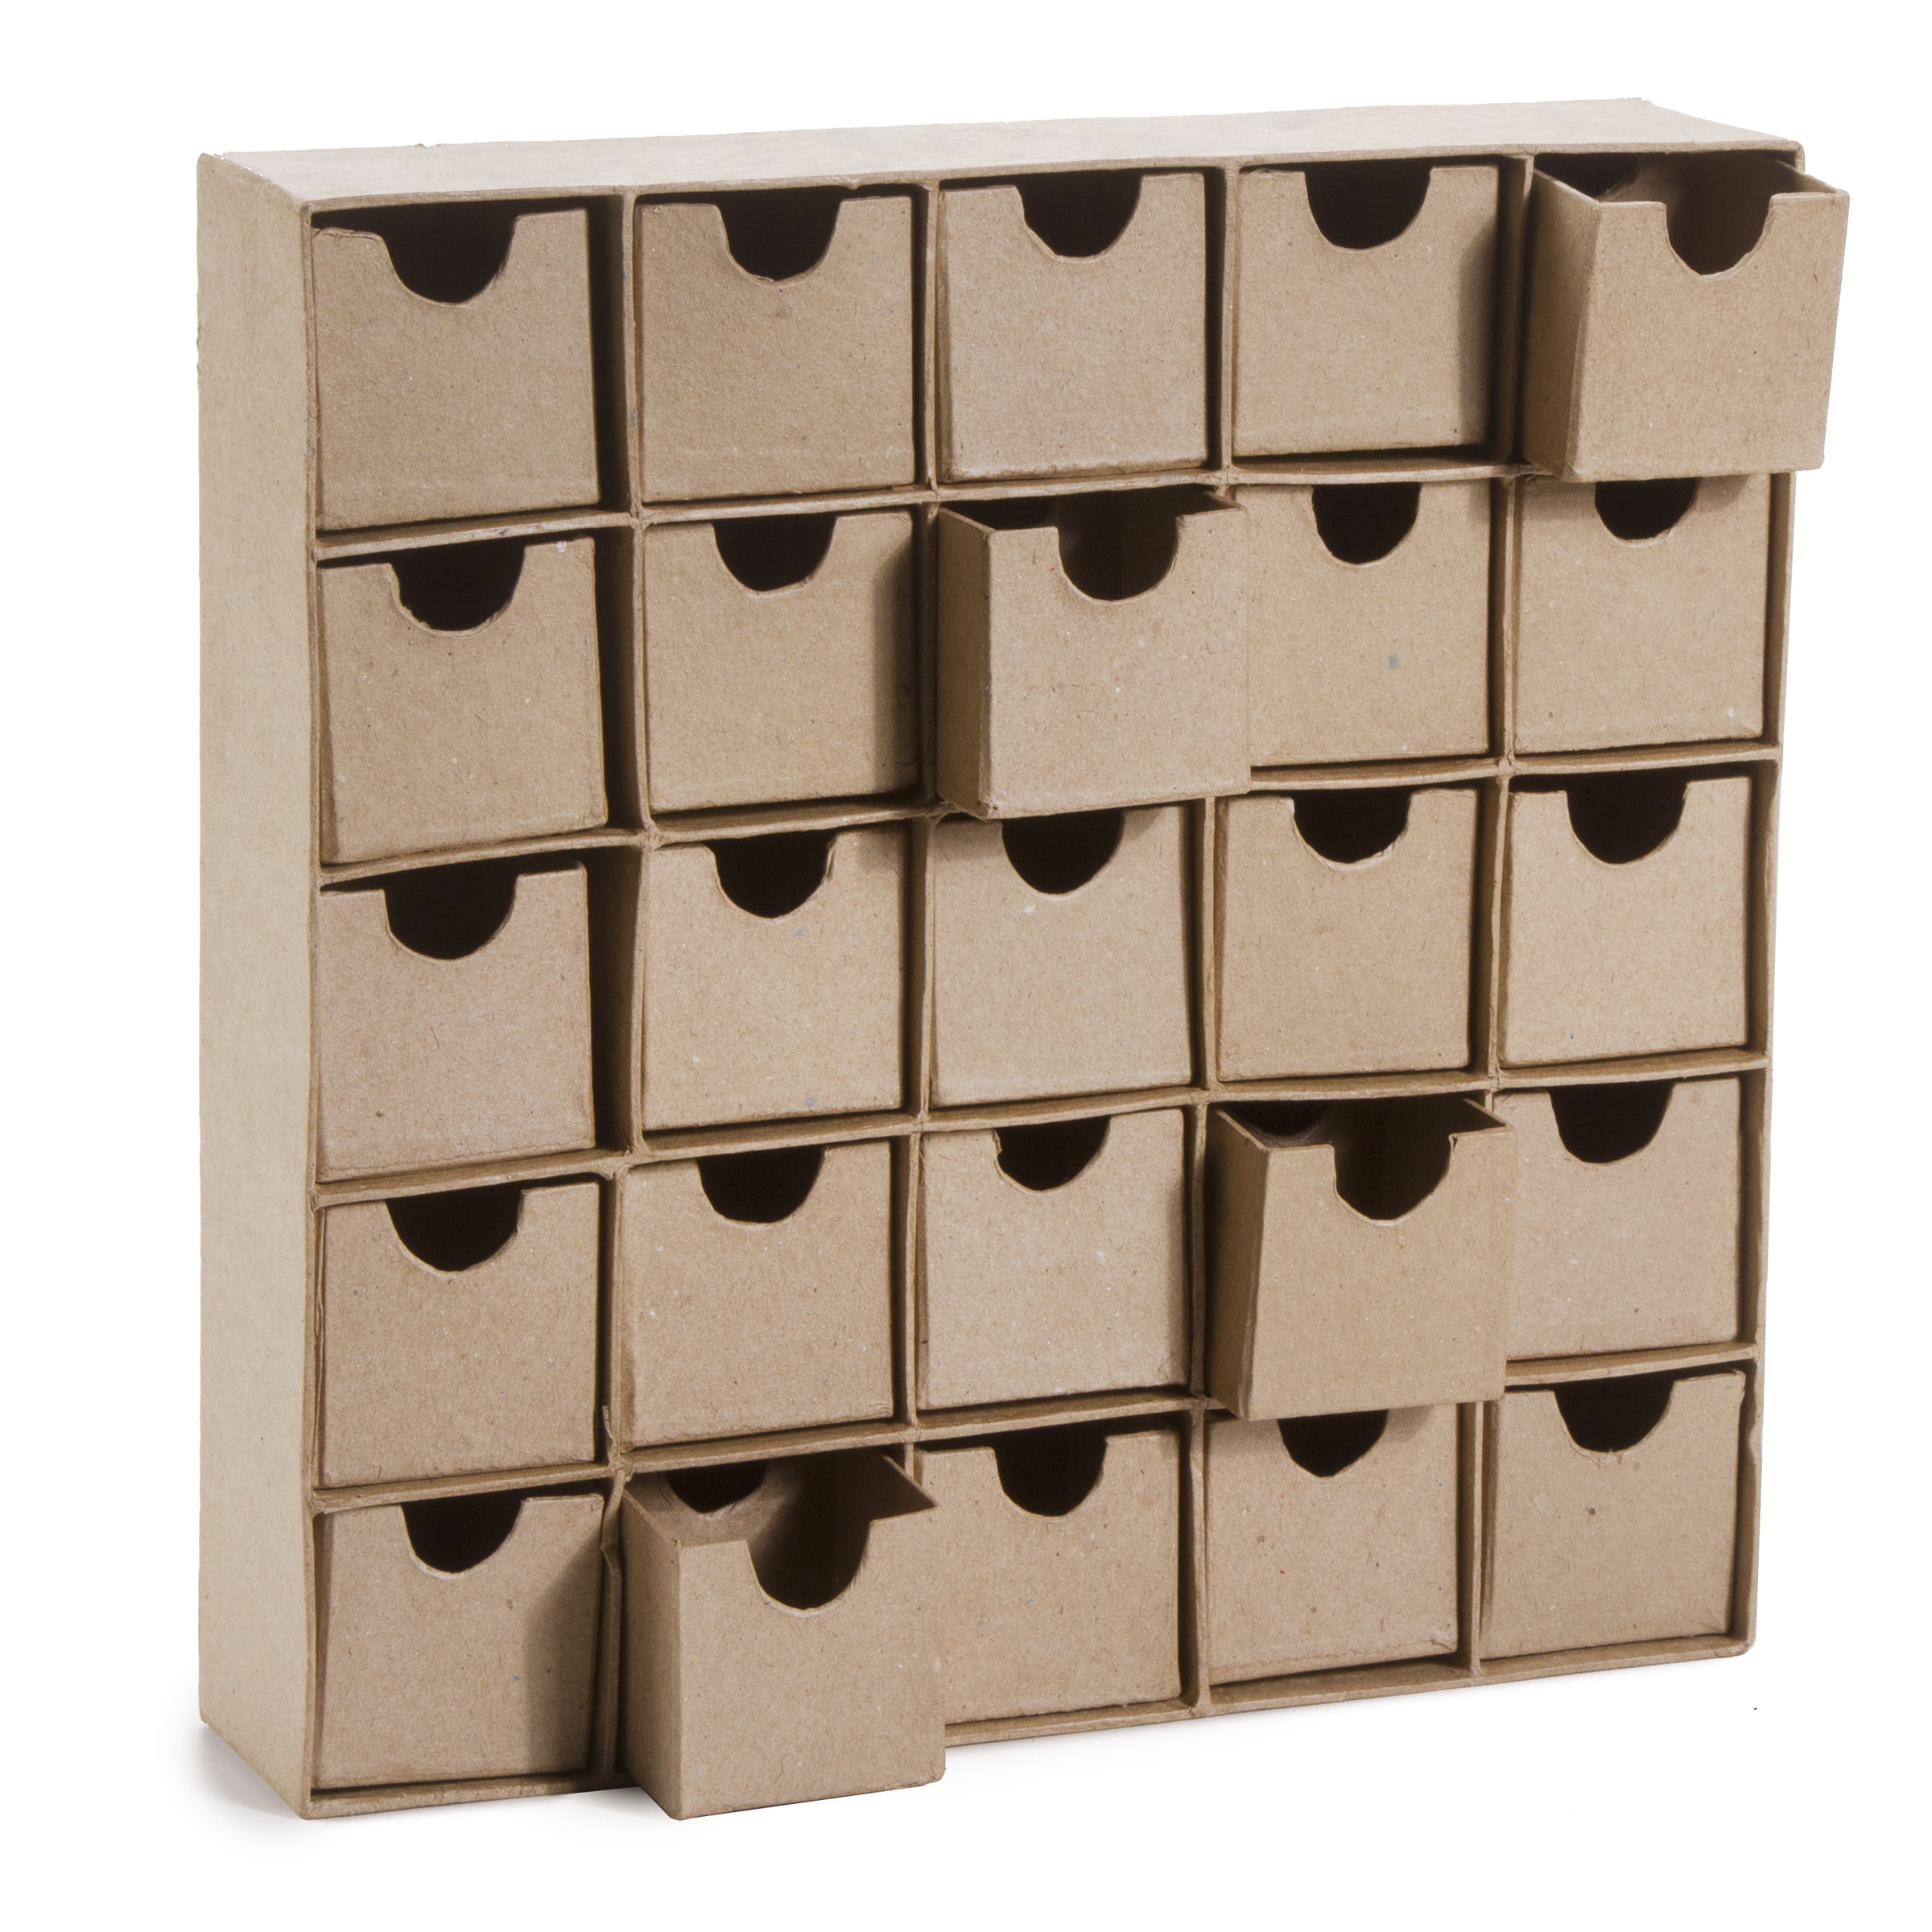 Unfinished Paper Mache Boxes 25 Compartments Walmart Com